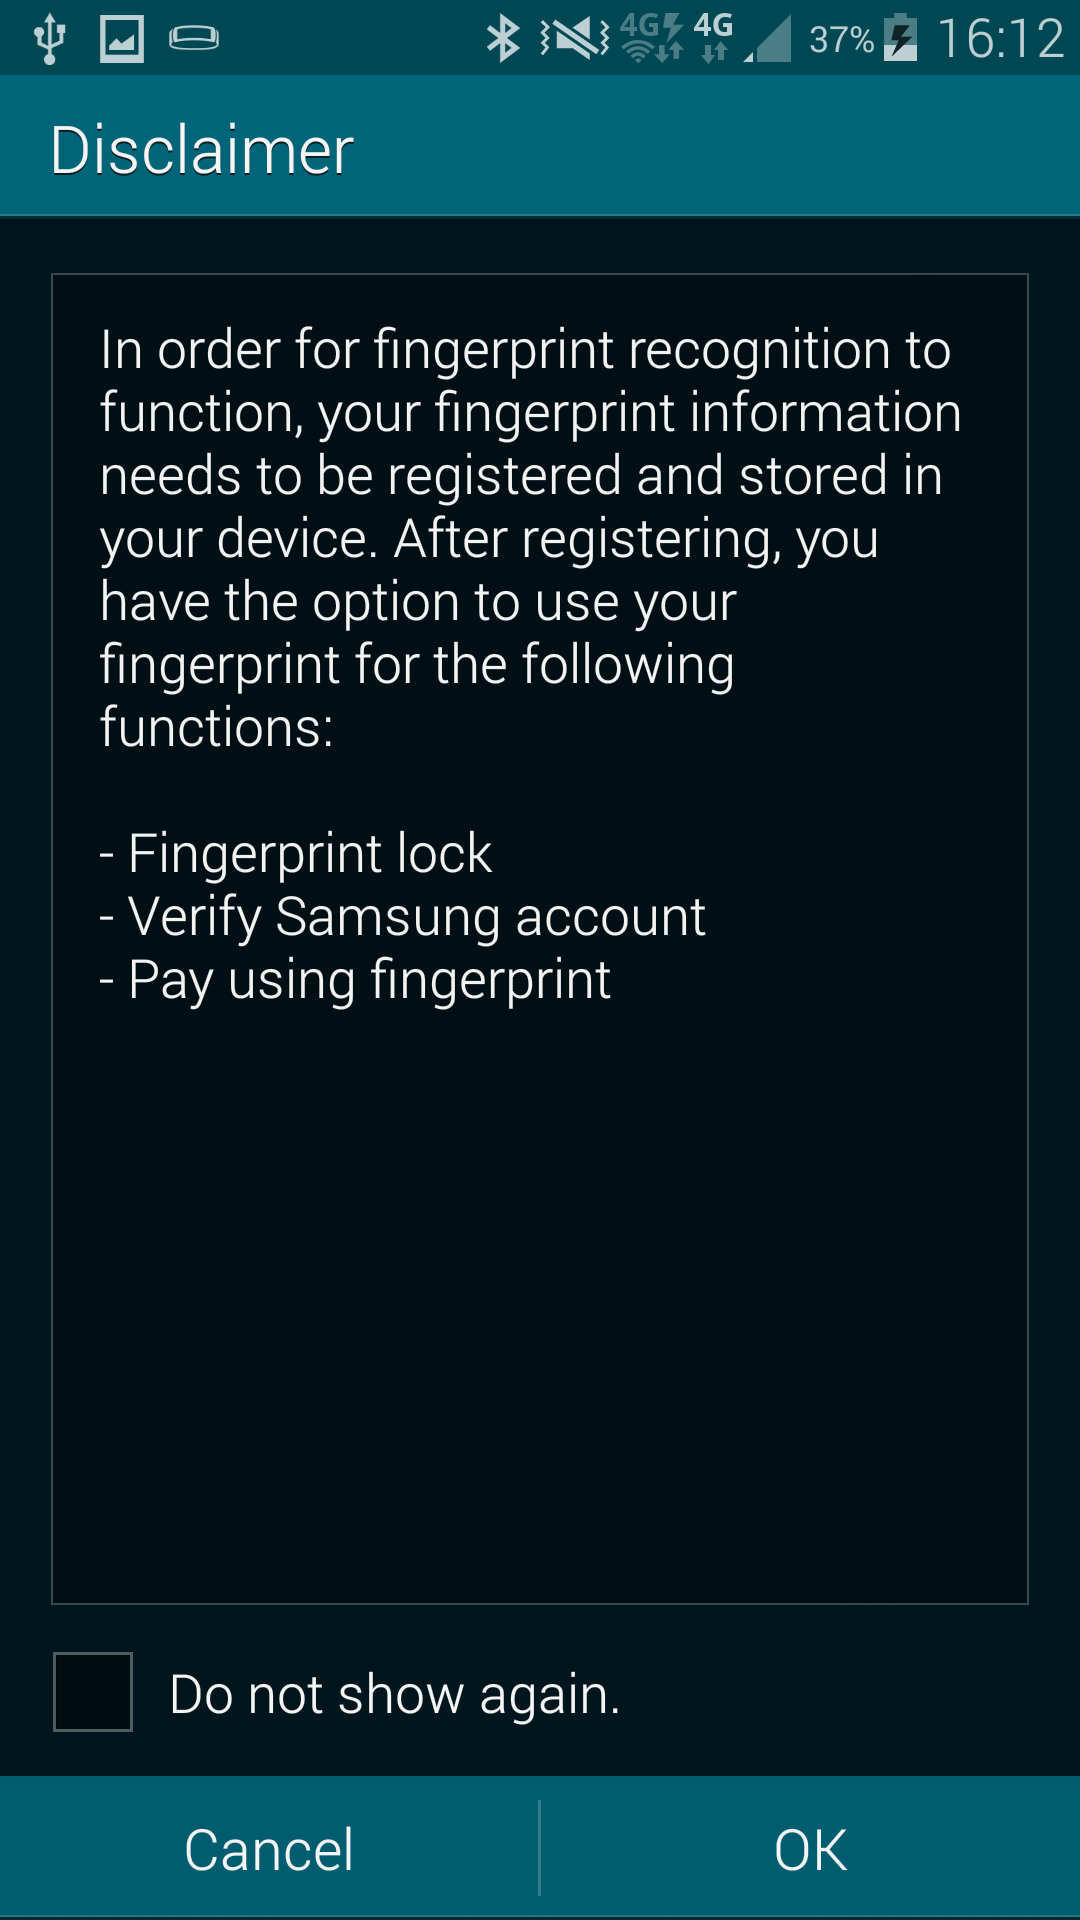 ycptech reviews samsung galaxy s5 fingerprint disclaimer